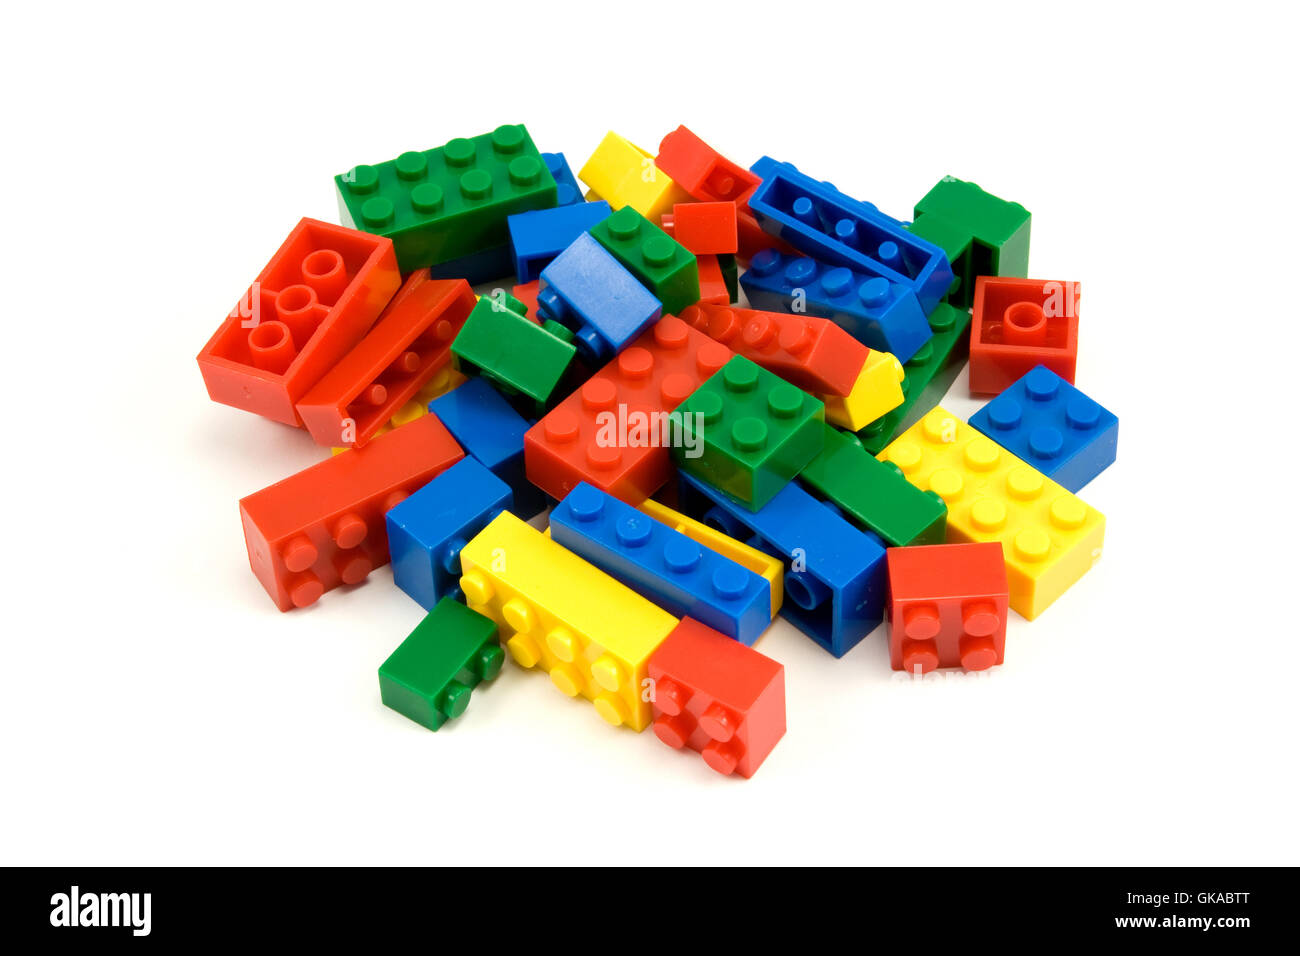 toy brick games Stock Photo